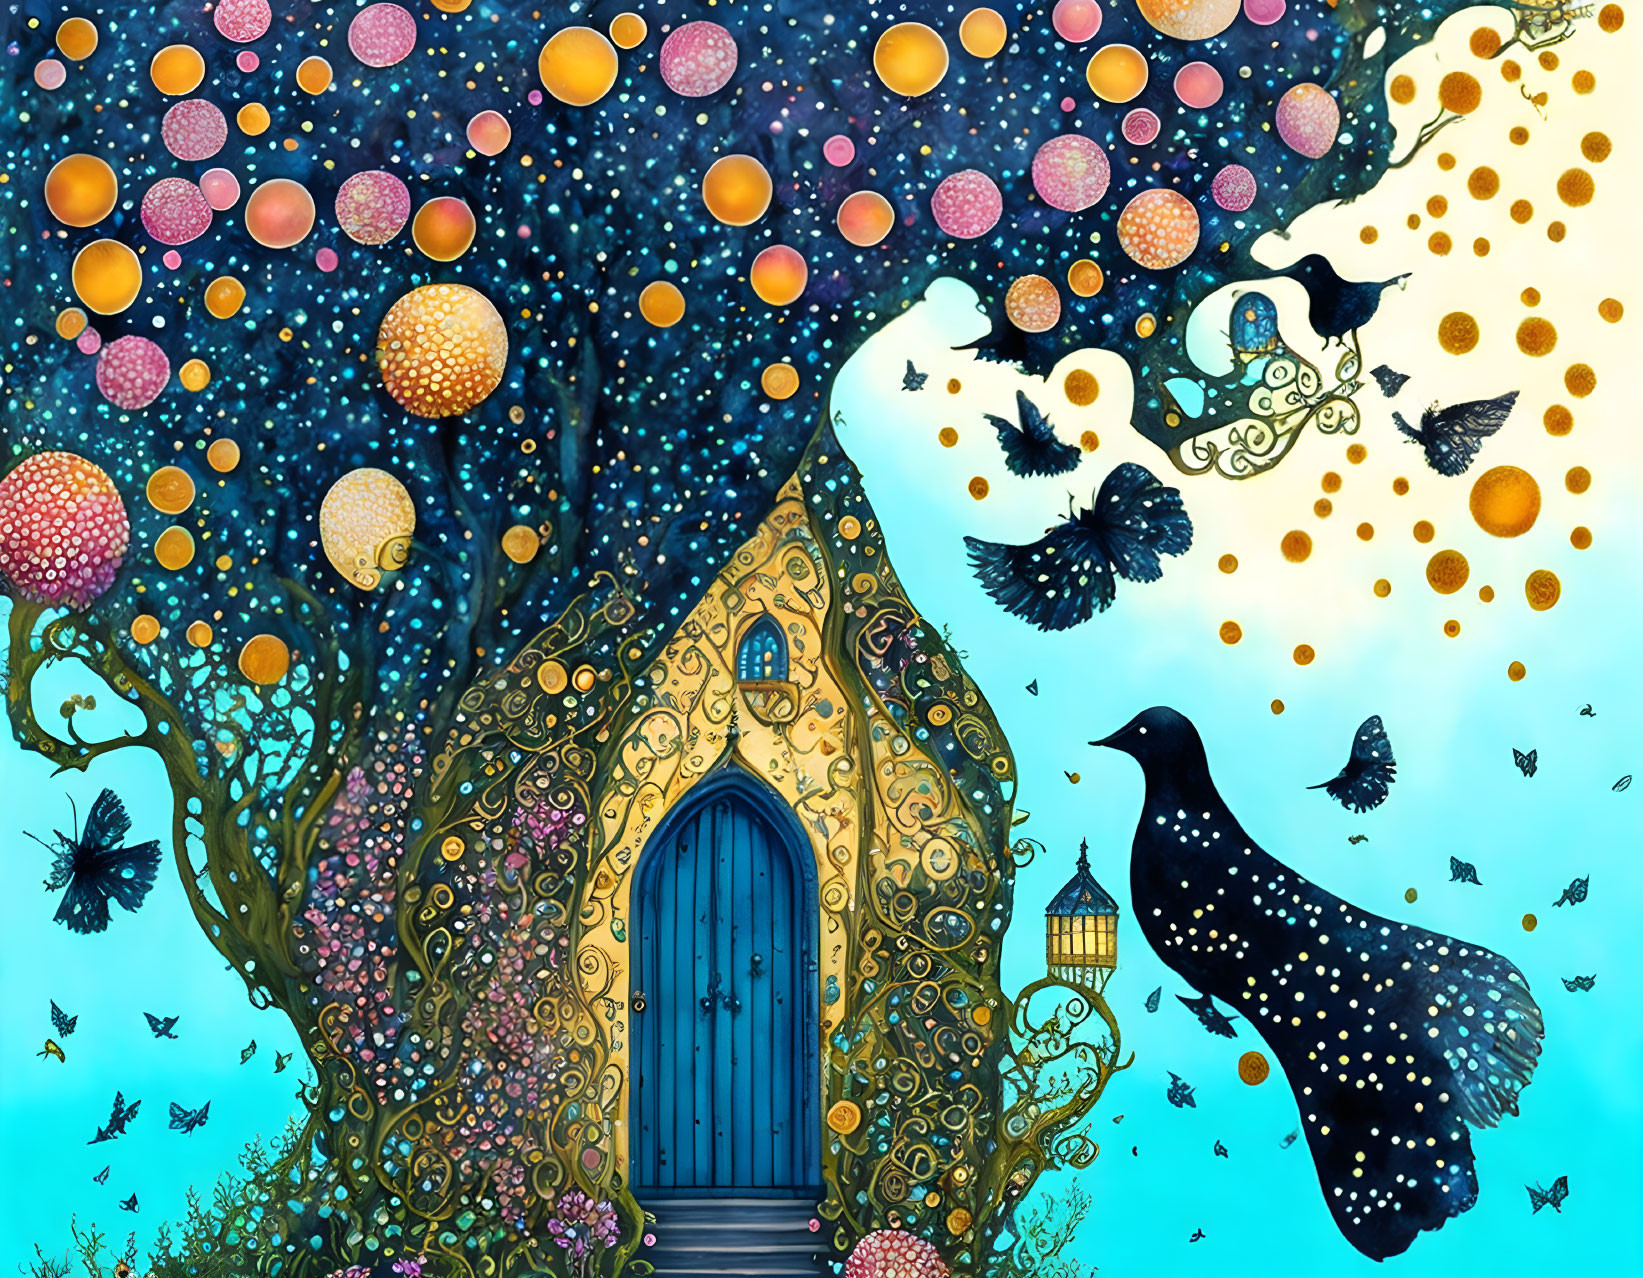 Colorful art piece featuring house, balloons, butterflies, blackbird, and woman's face.